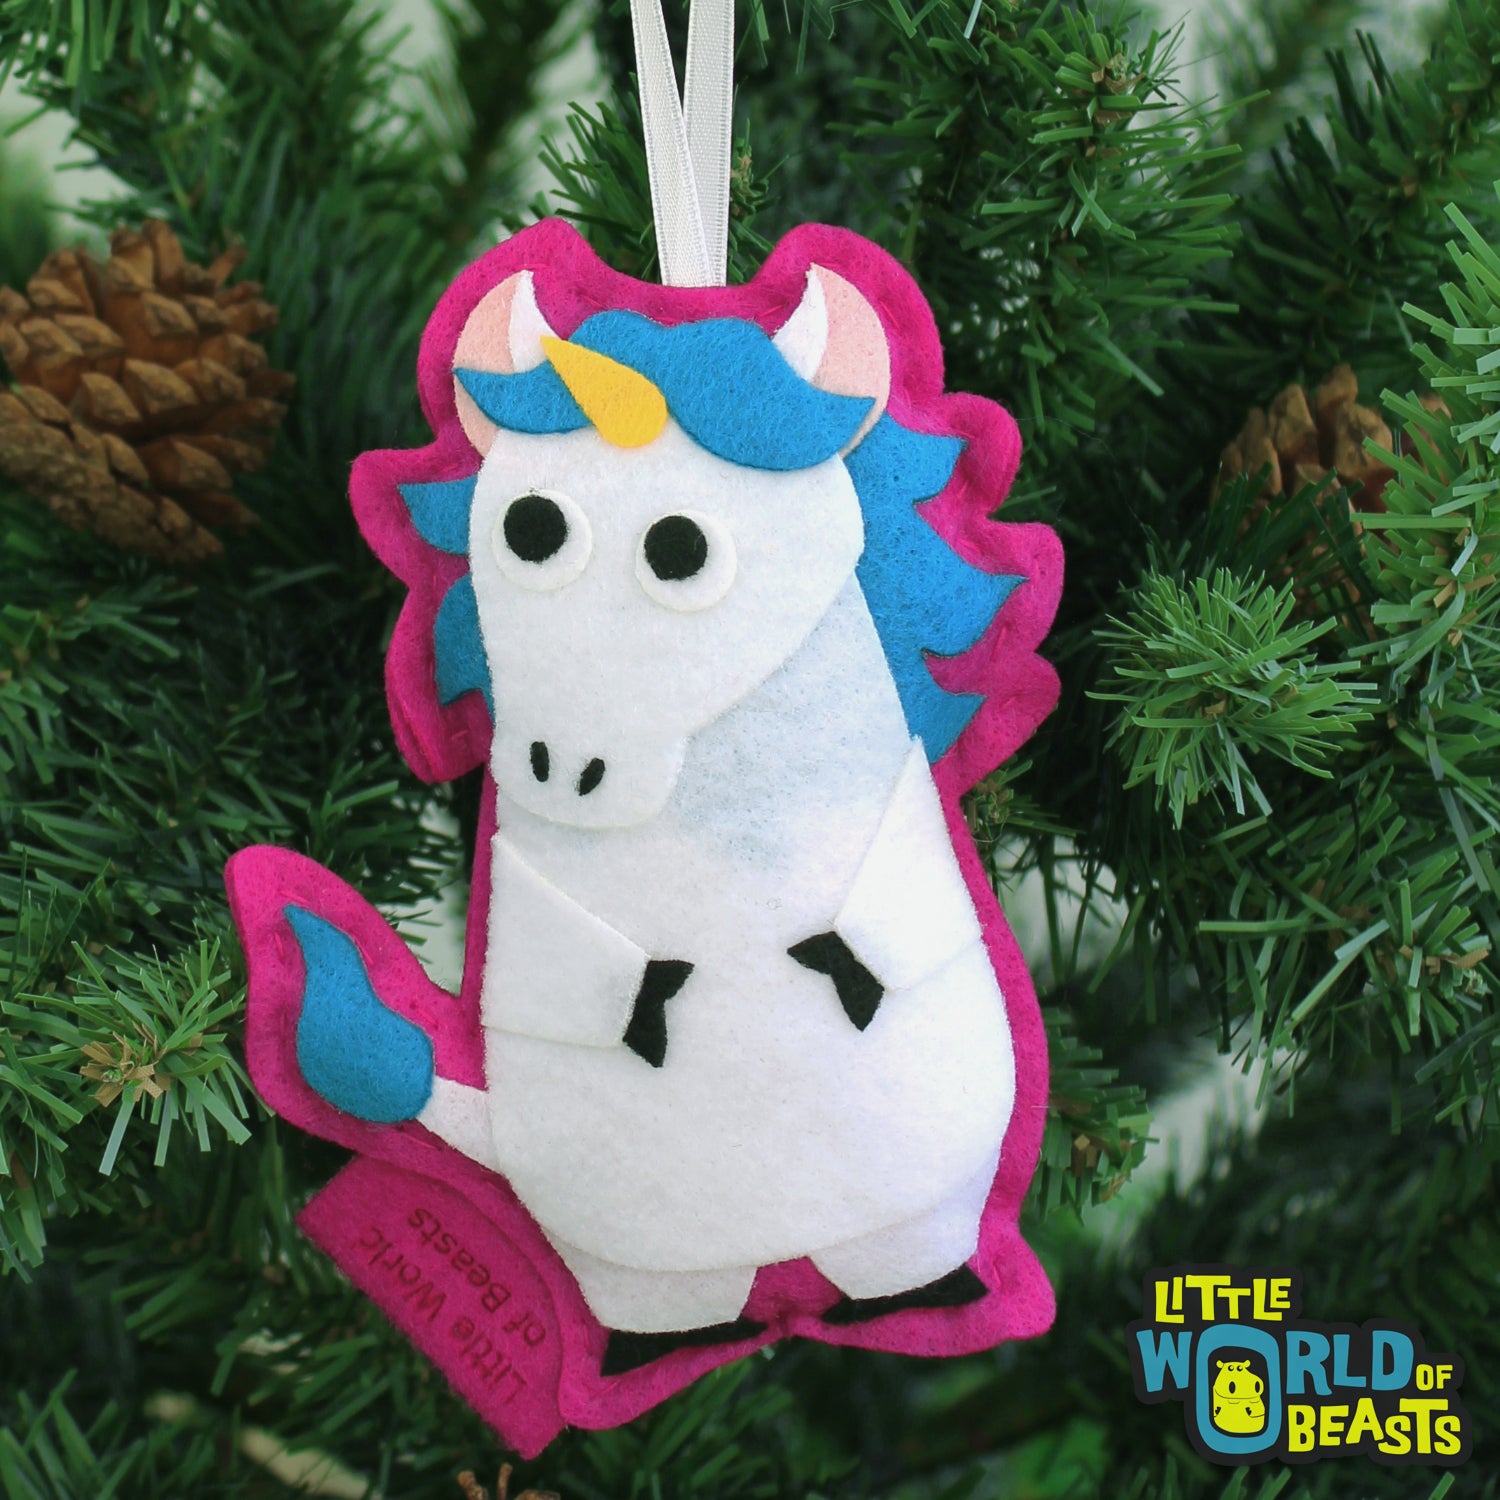 Little World of Beasts - Unicorn Felt Christmas Tree Ornament